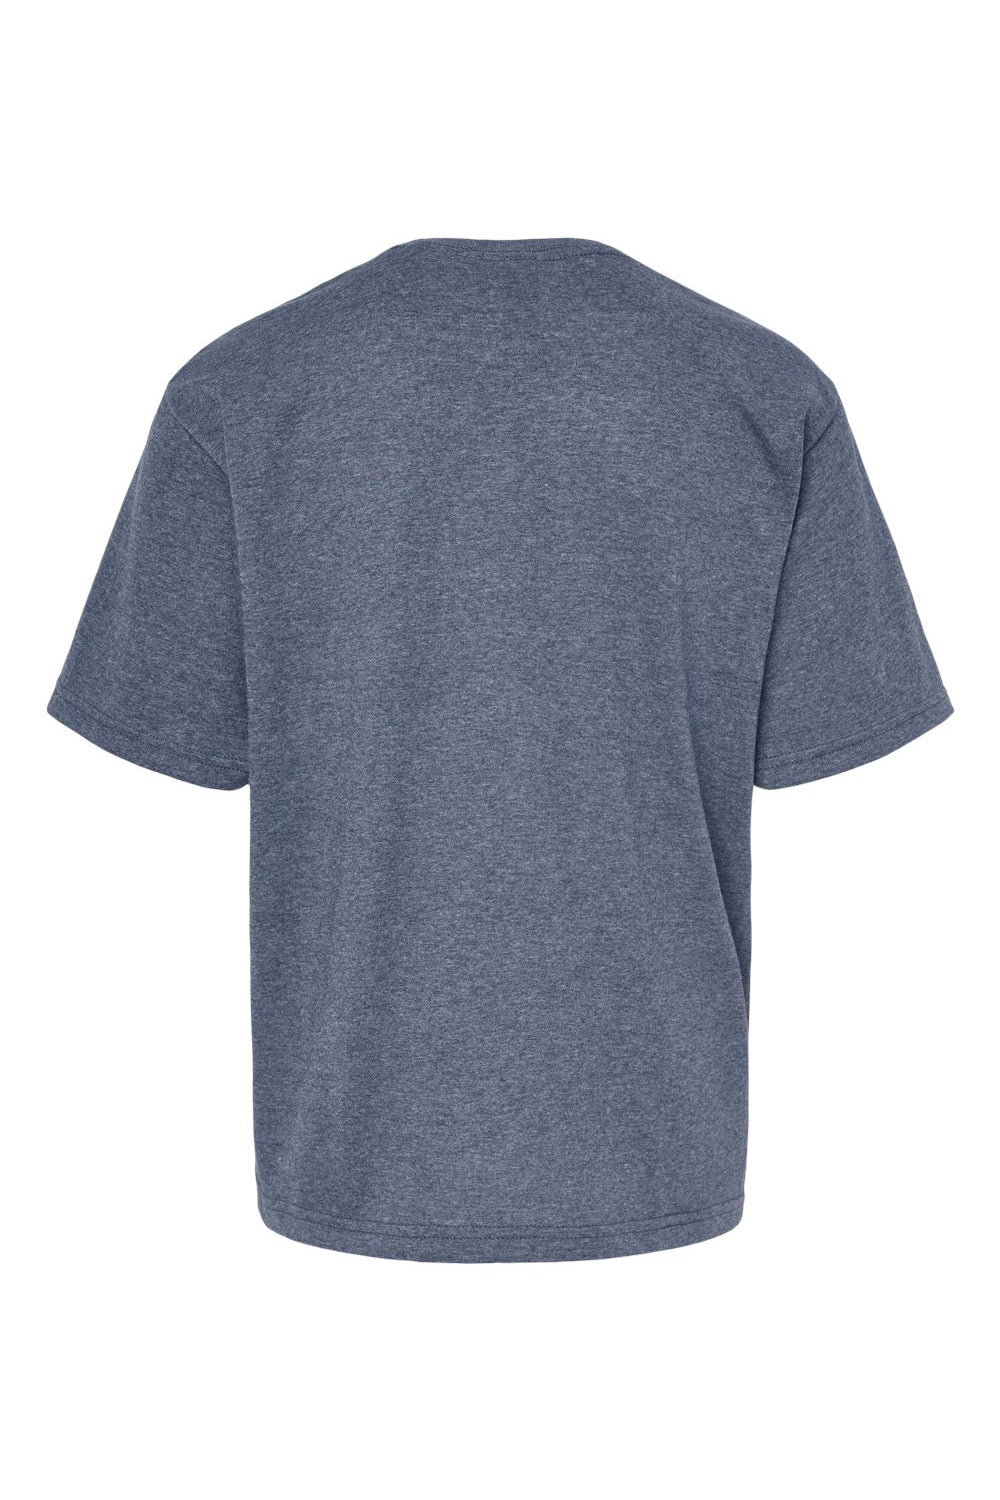 M&O 4850 Youth Gold Soft Touch Short Sleeve Crewneck T-Shirt Heather Navy Blue Flat Back